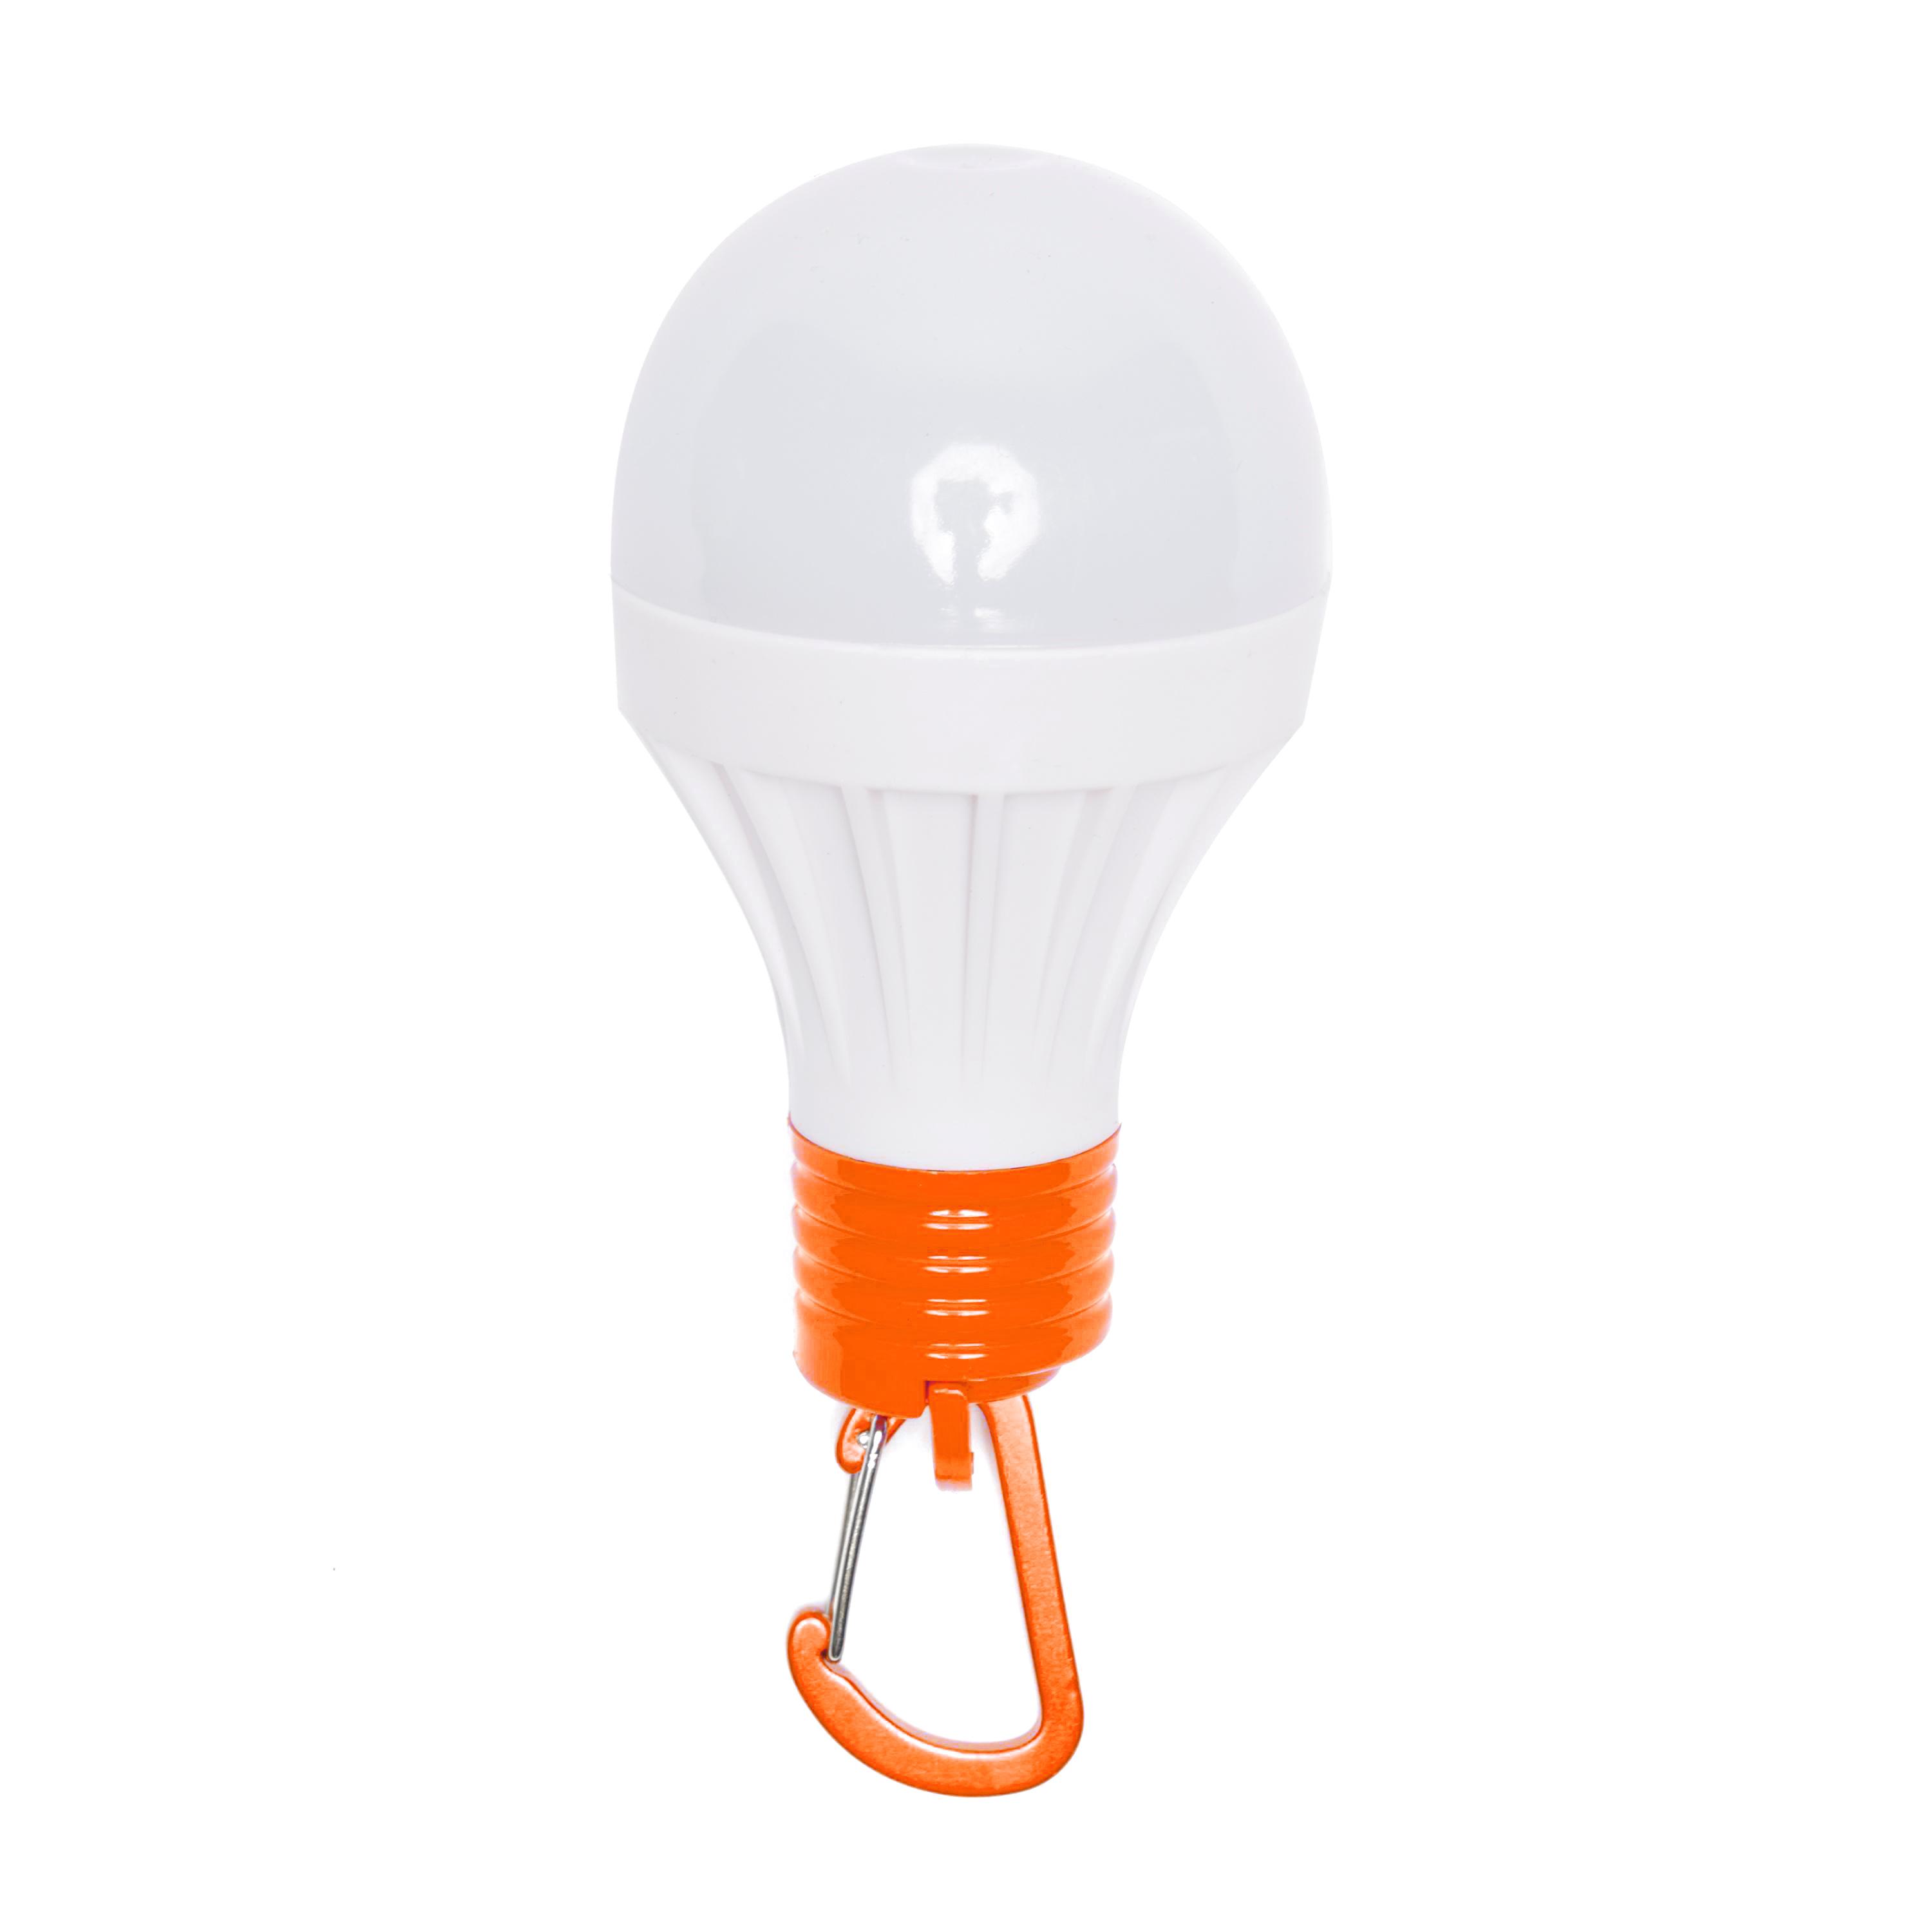 product image of Eurohike 1W LED Orb Light, White